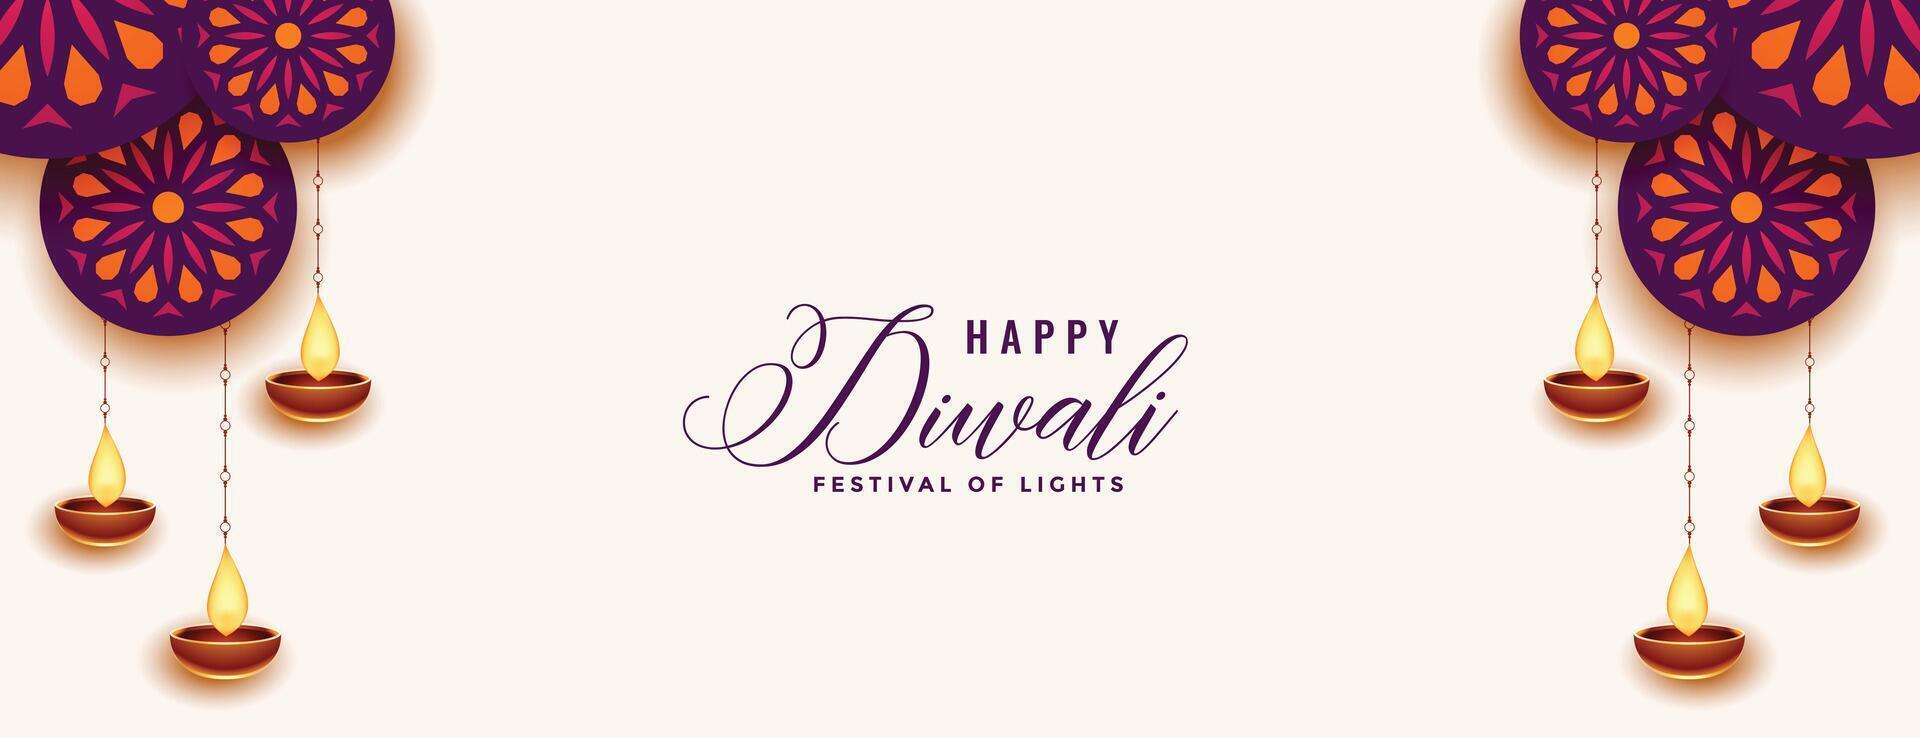 decorative happy diwali white banner with diya design vector